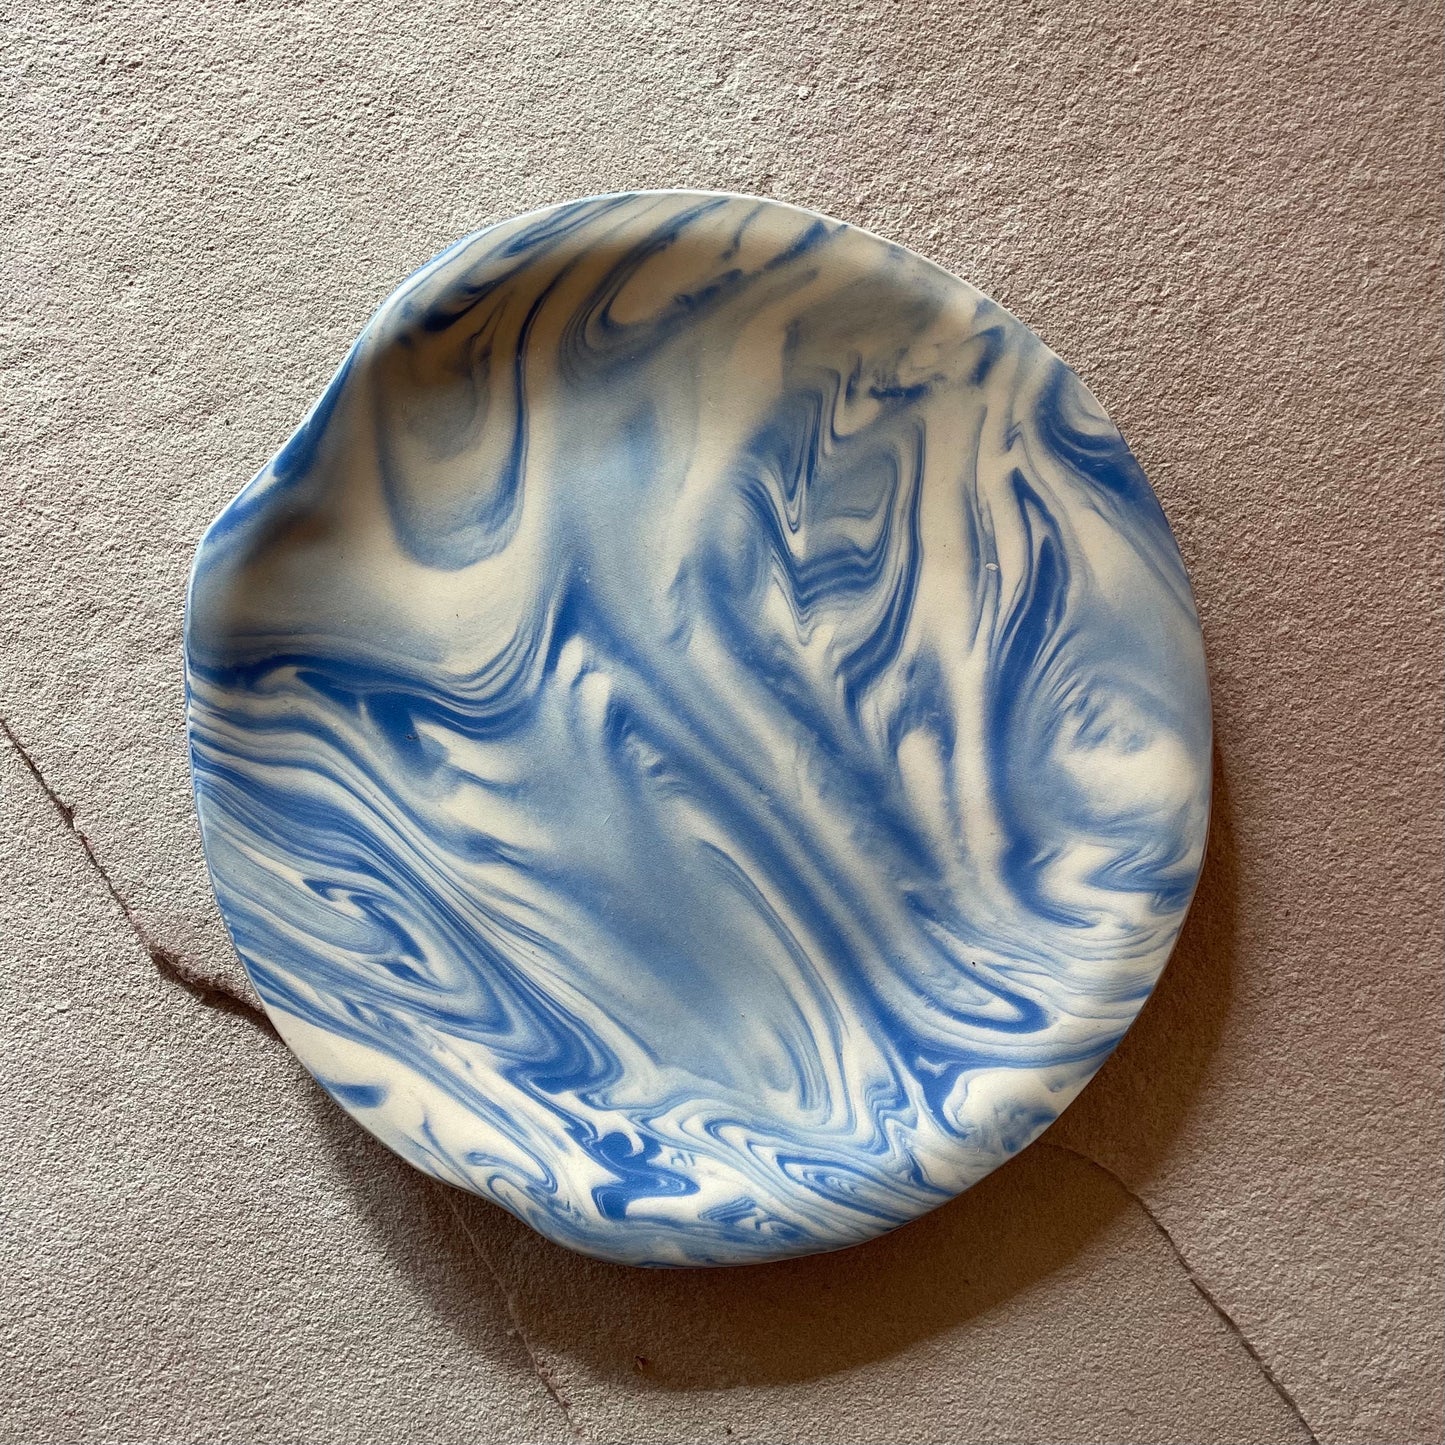 Clothing Optional Ceramics Marbled Plates